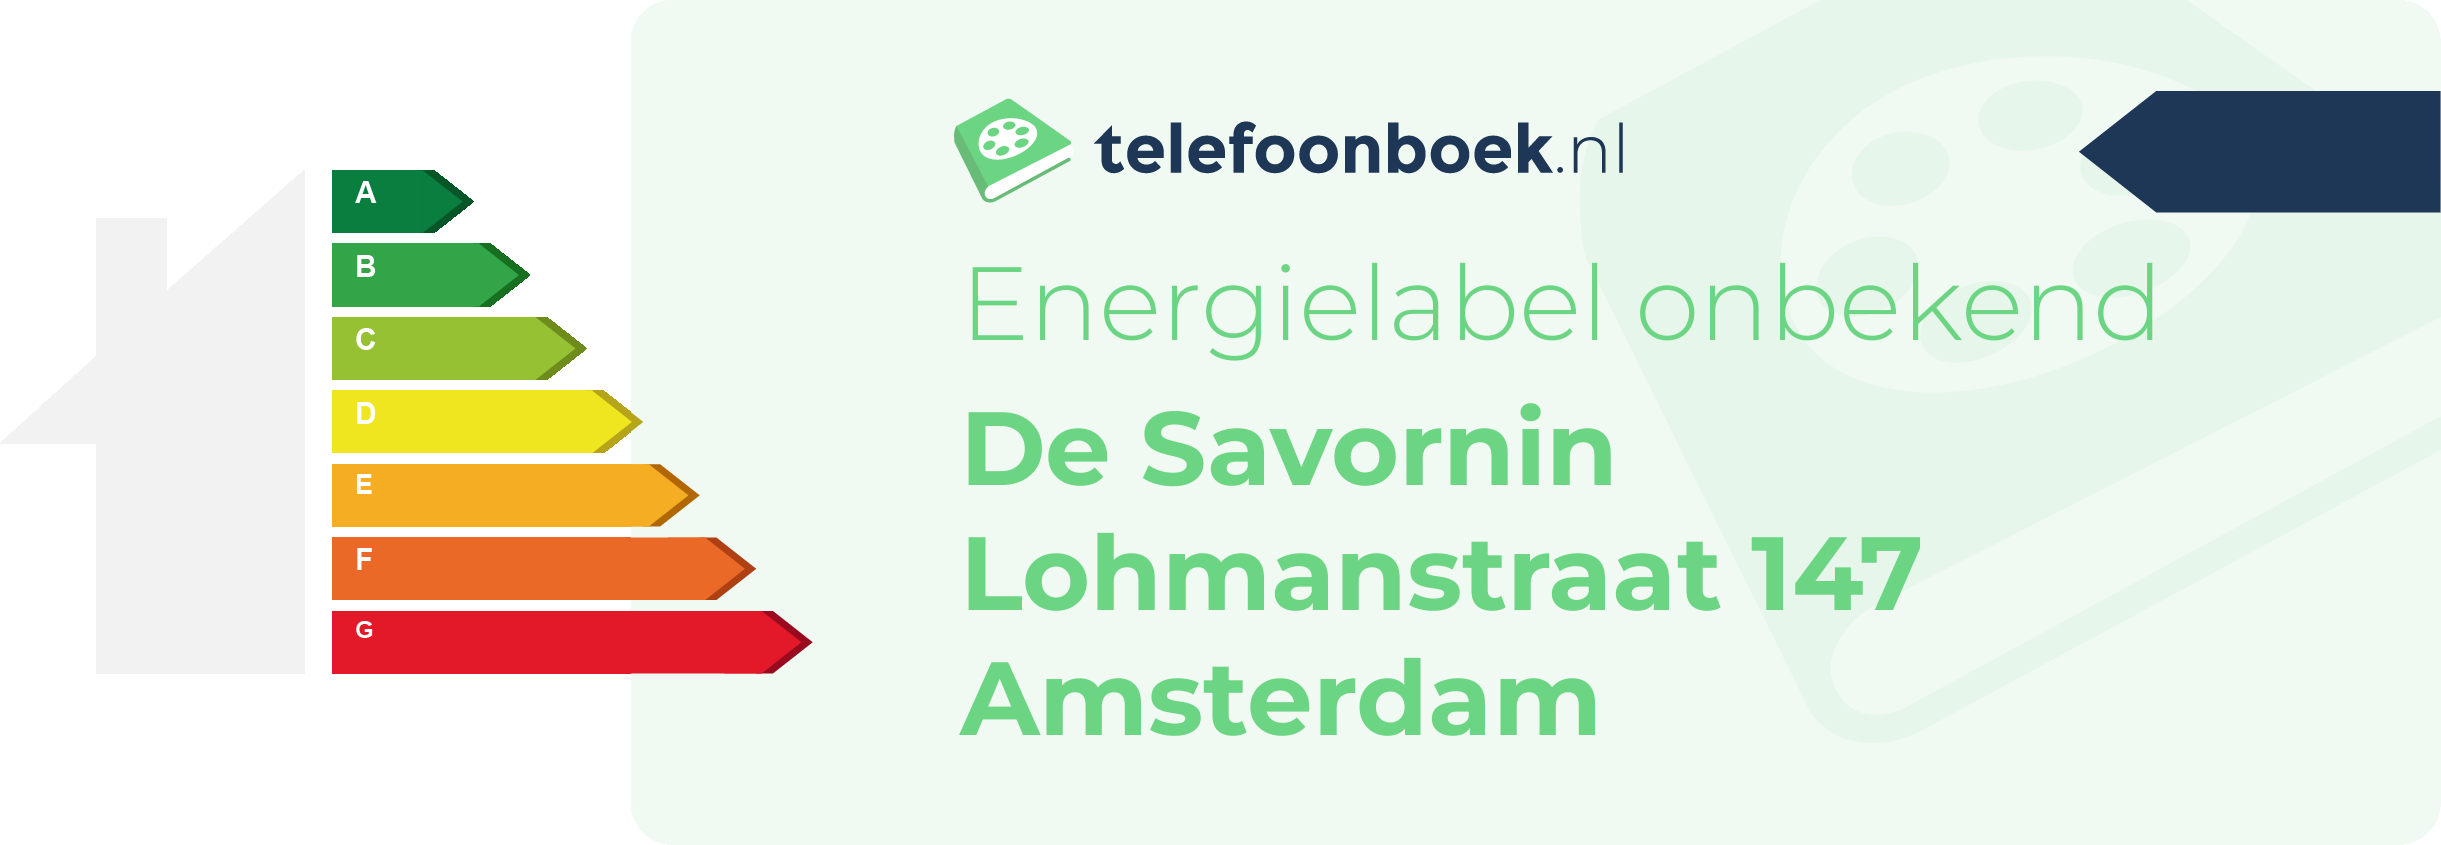 Energielabel De Savornin Lohmanstraat 147 Amsterdam